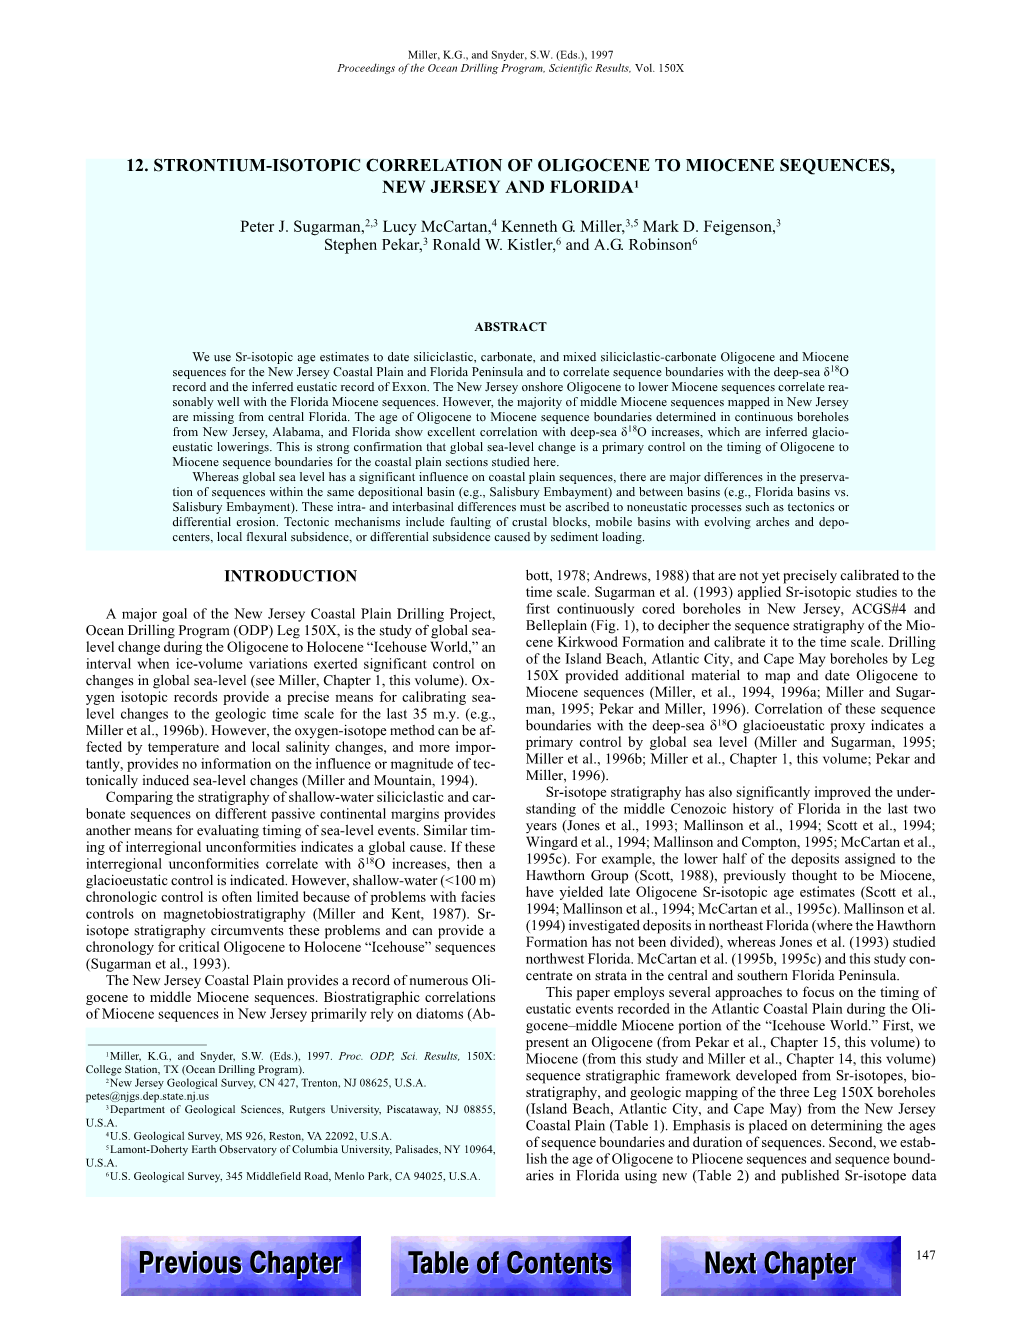 12. Strontium-Isotopic Correlation of Oligocene to Miocene Sequences, New Jersey and Florida1